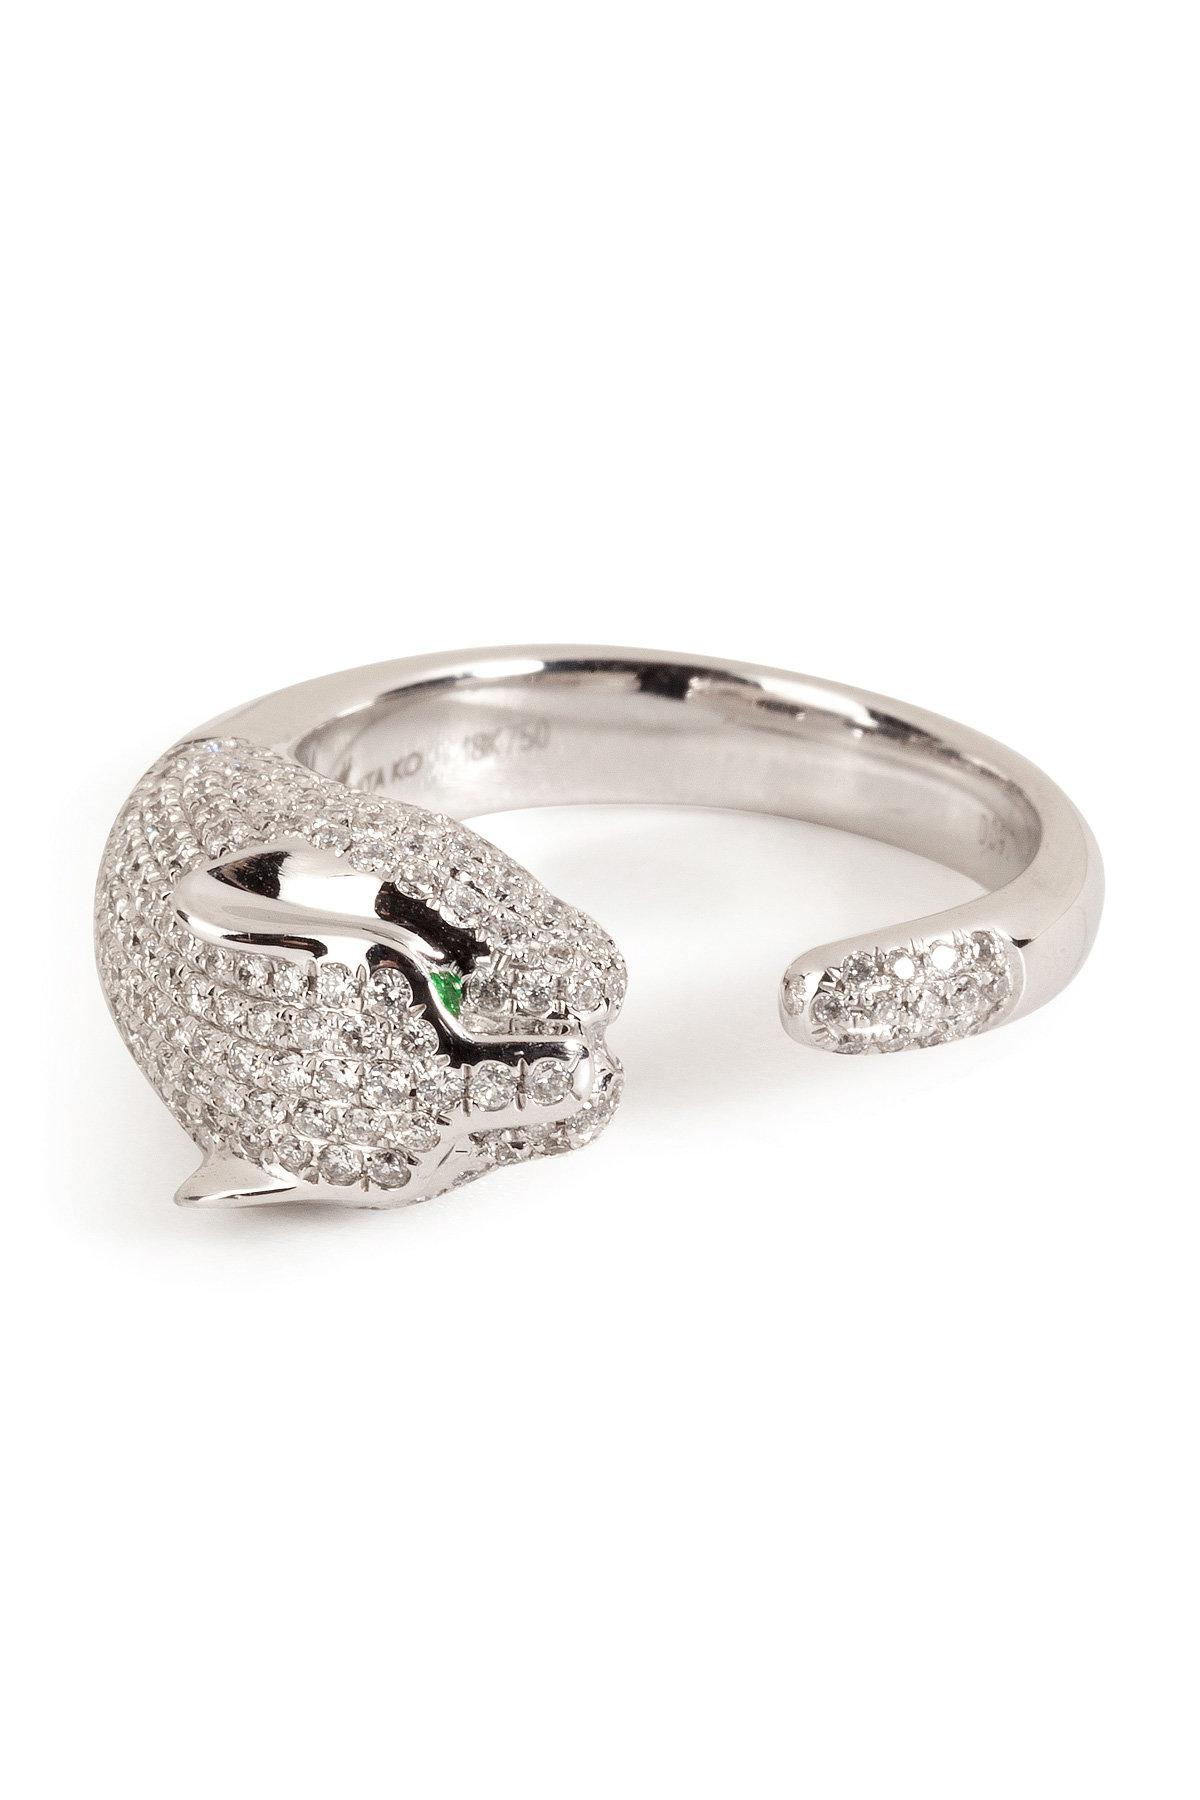 Anita Ko 18kt White Gold Cougar Ring With Diamonds In White Lyst